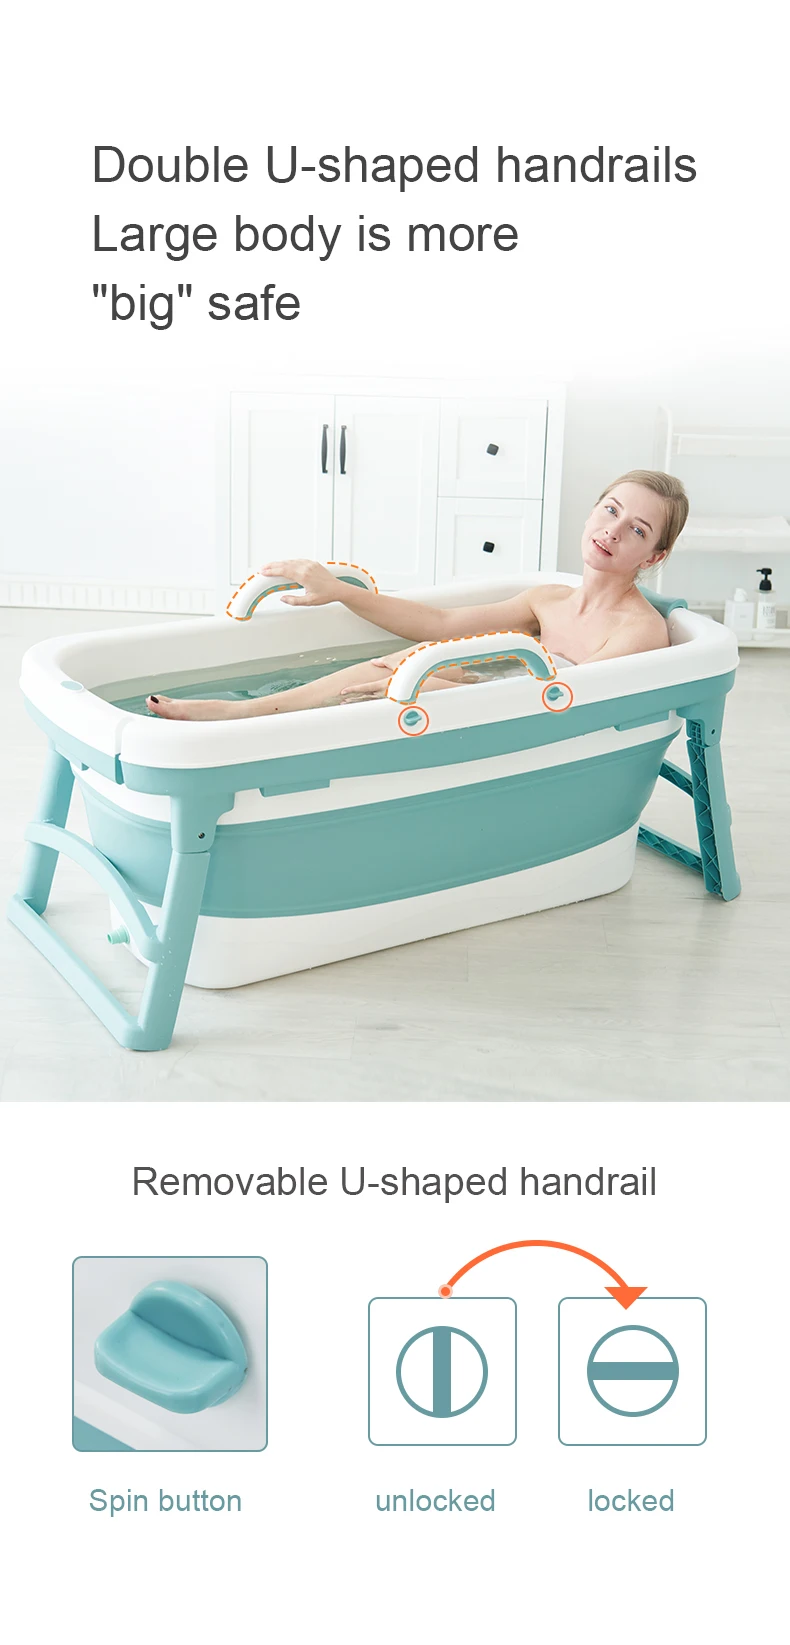 Bathboard Folding Bathtub For Sale / ObboMed Hb-1700 Folding Inflatable